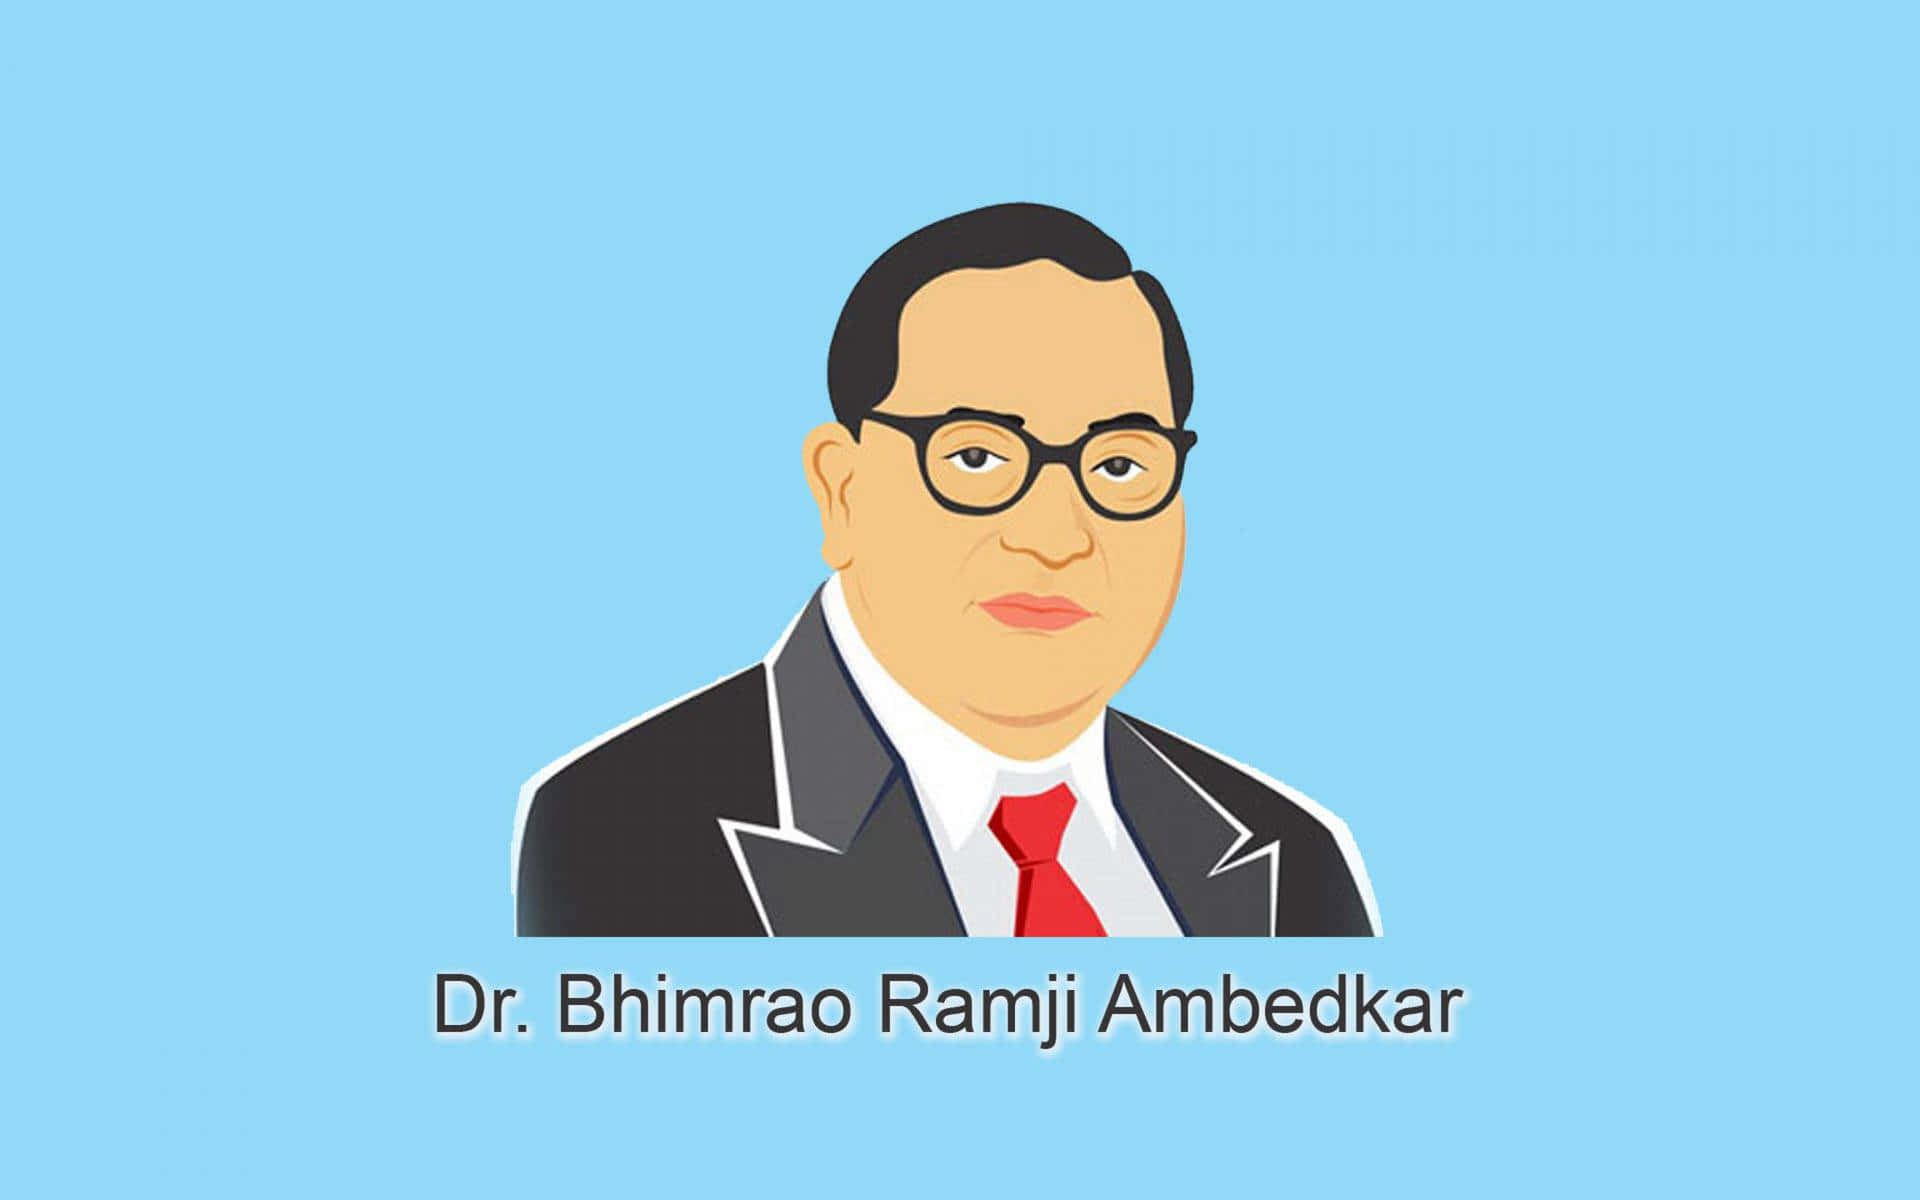 Dr. B. R. Ambedkar - Indian jurist, economist, and social reformer